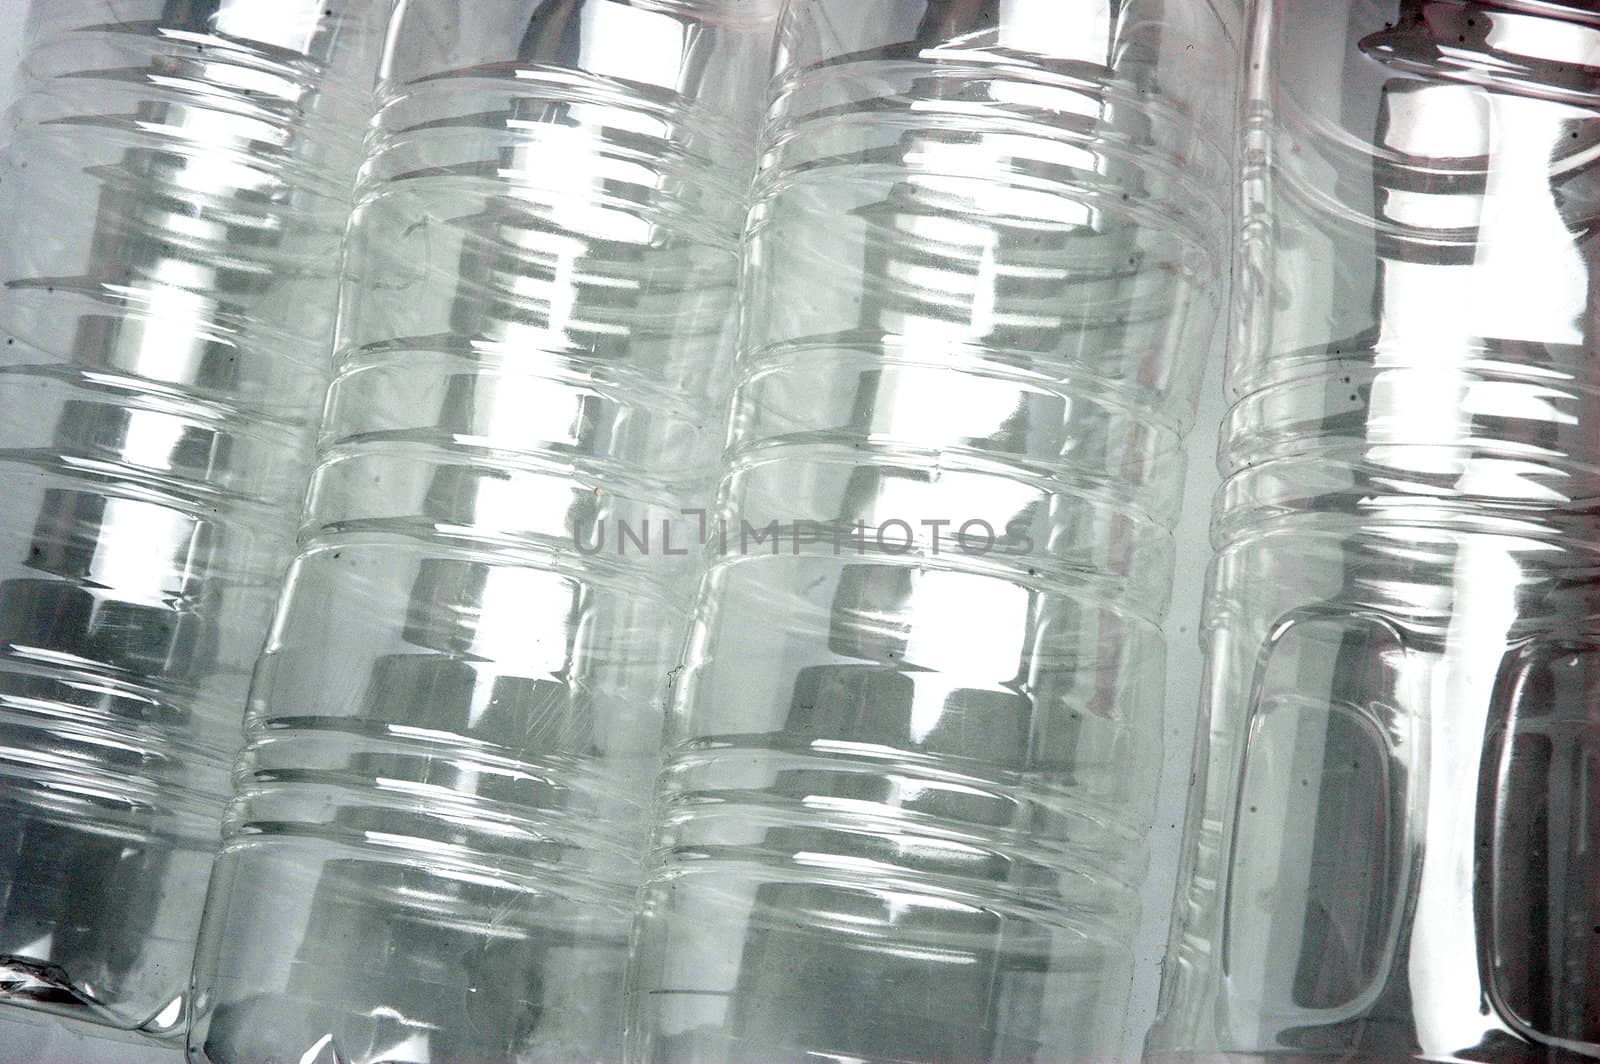 backgorund texture pattern of plastic beverage bottles